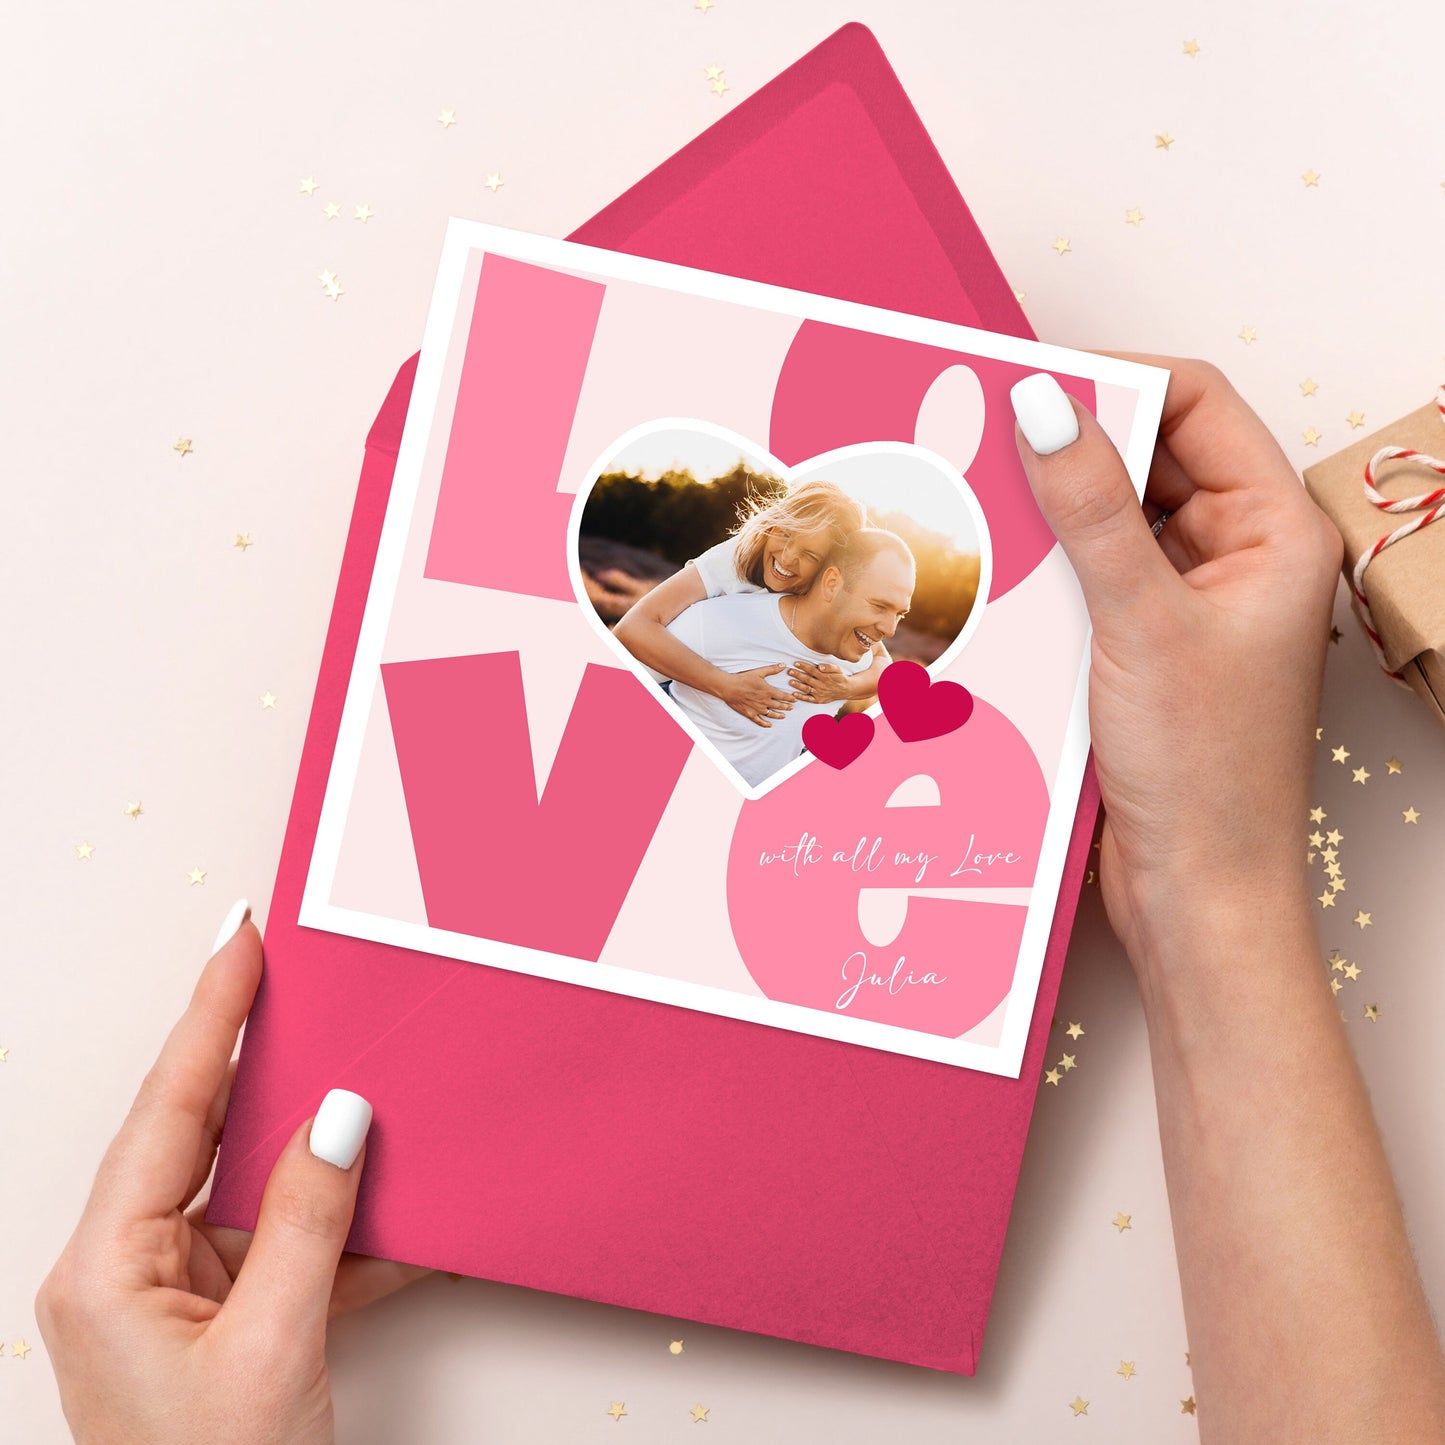 Personalised LOVE Photo Card, Photo Valentine's Day Card, Valentine's Card for wife, husband, boyfriend, girlfriend, Modern Valentines Card